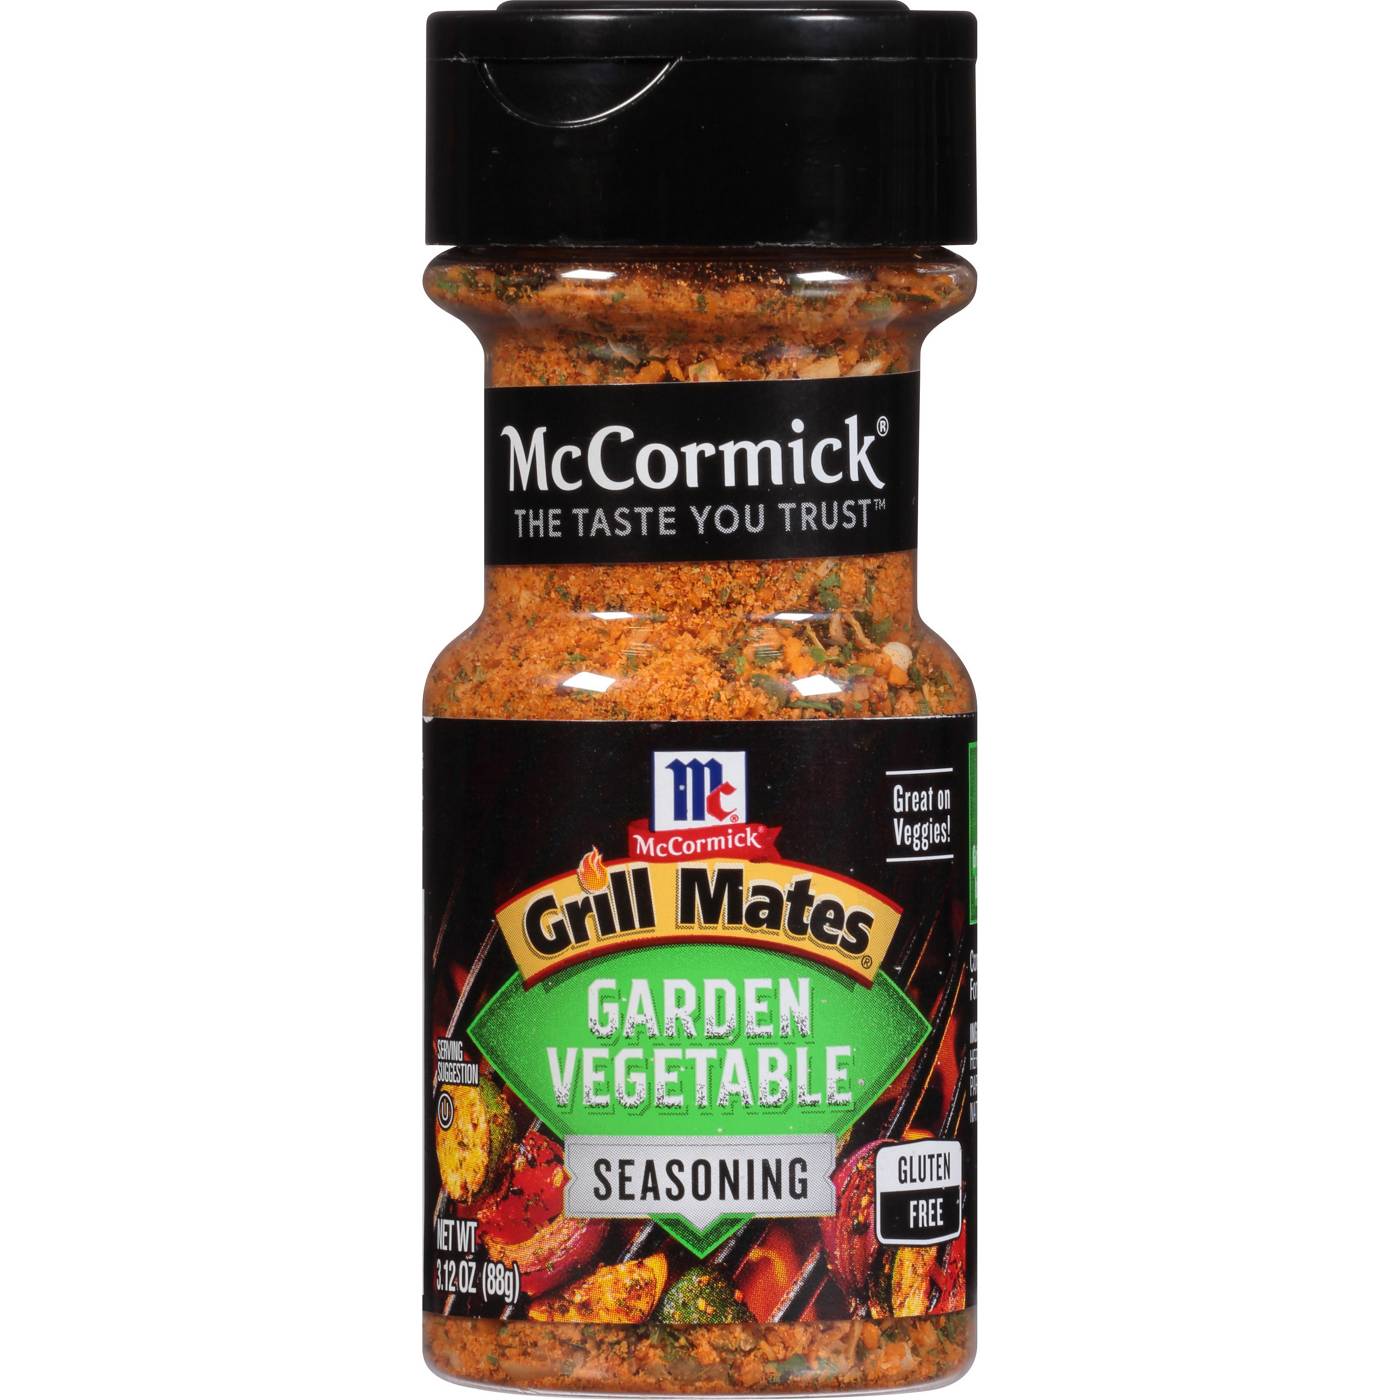 McCormick Grill Mates Garden Vegetable Seasoning; image 1 of 6